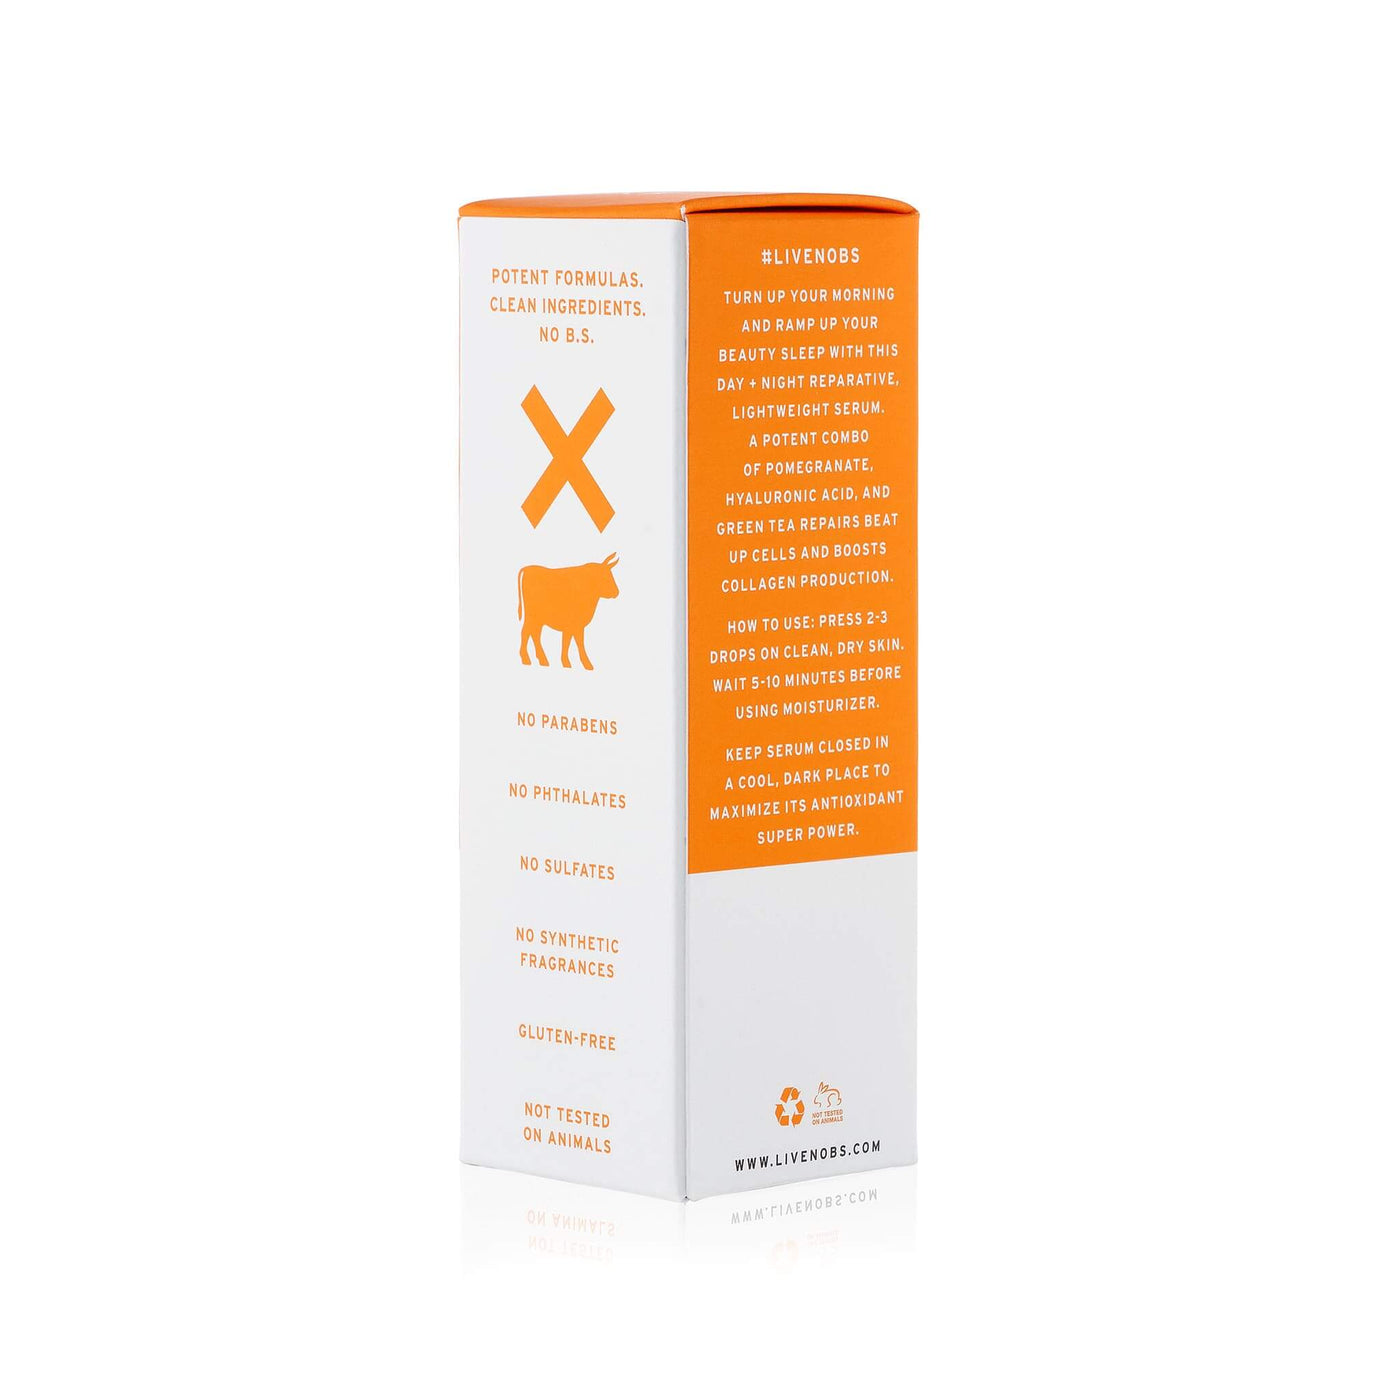 3ct Value-Pack: Vitamin C + E Serum (includes 3 deluxe Minis: Retinol, CoQ10 and Eye Cream)